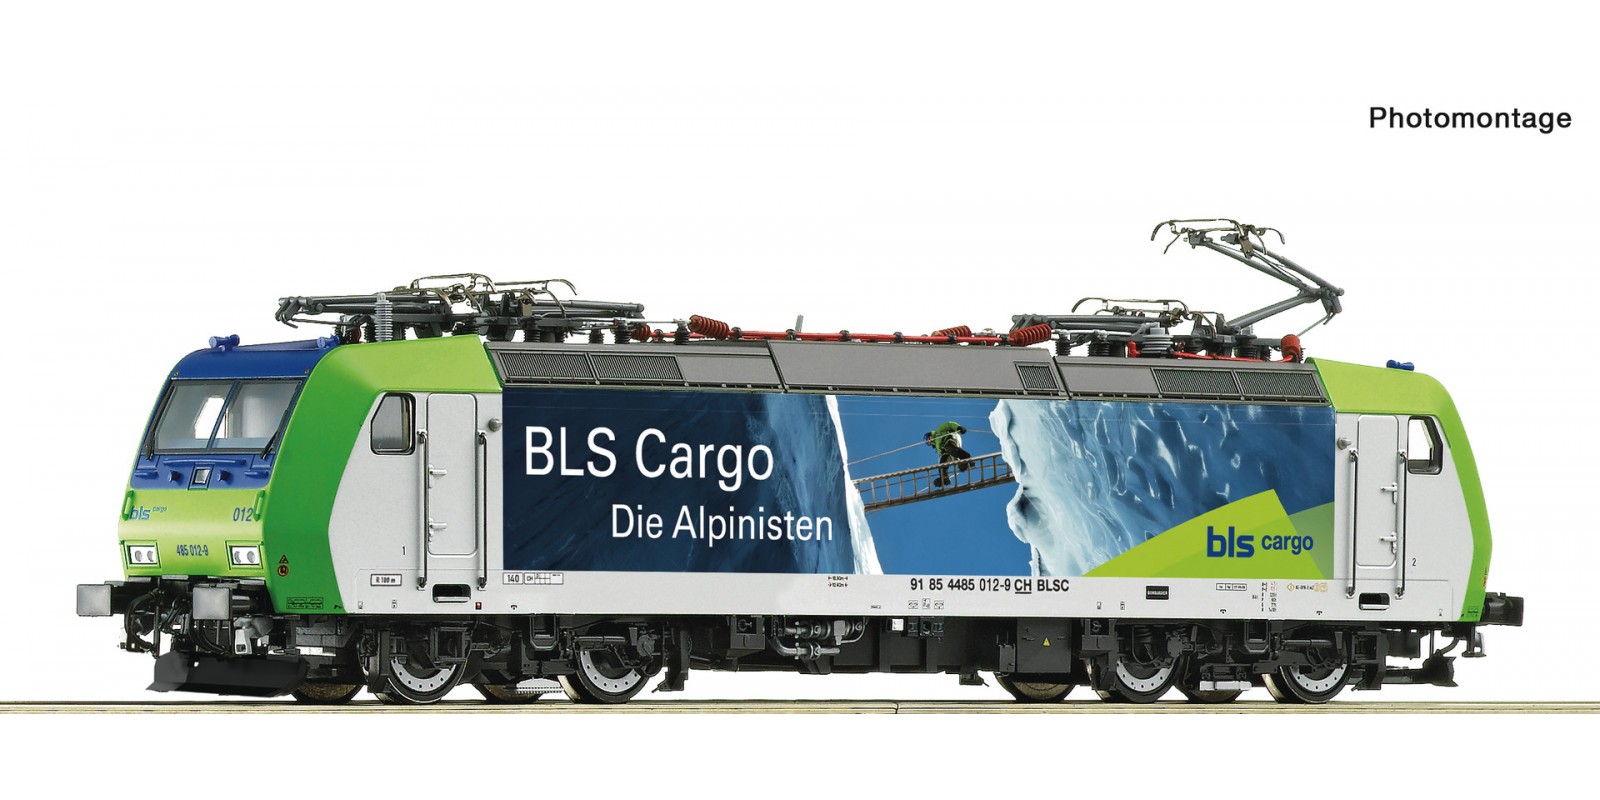 RO70337 Electric locomotive 485 0 12-9, BLS Cargo          